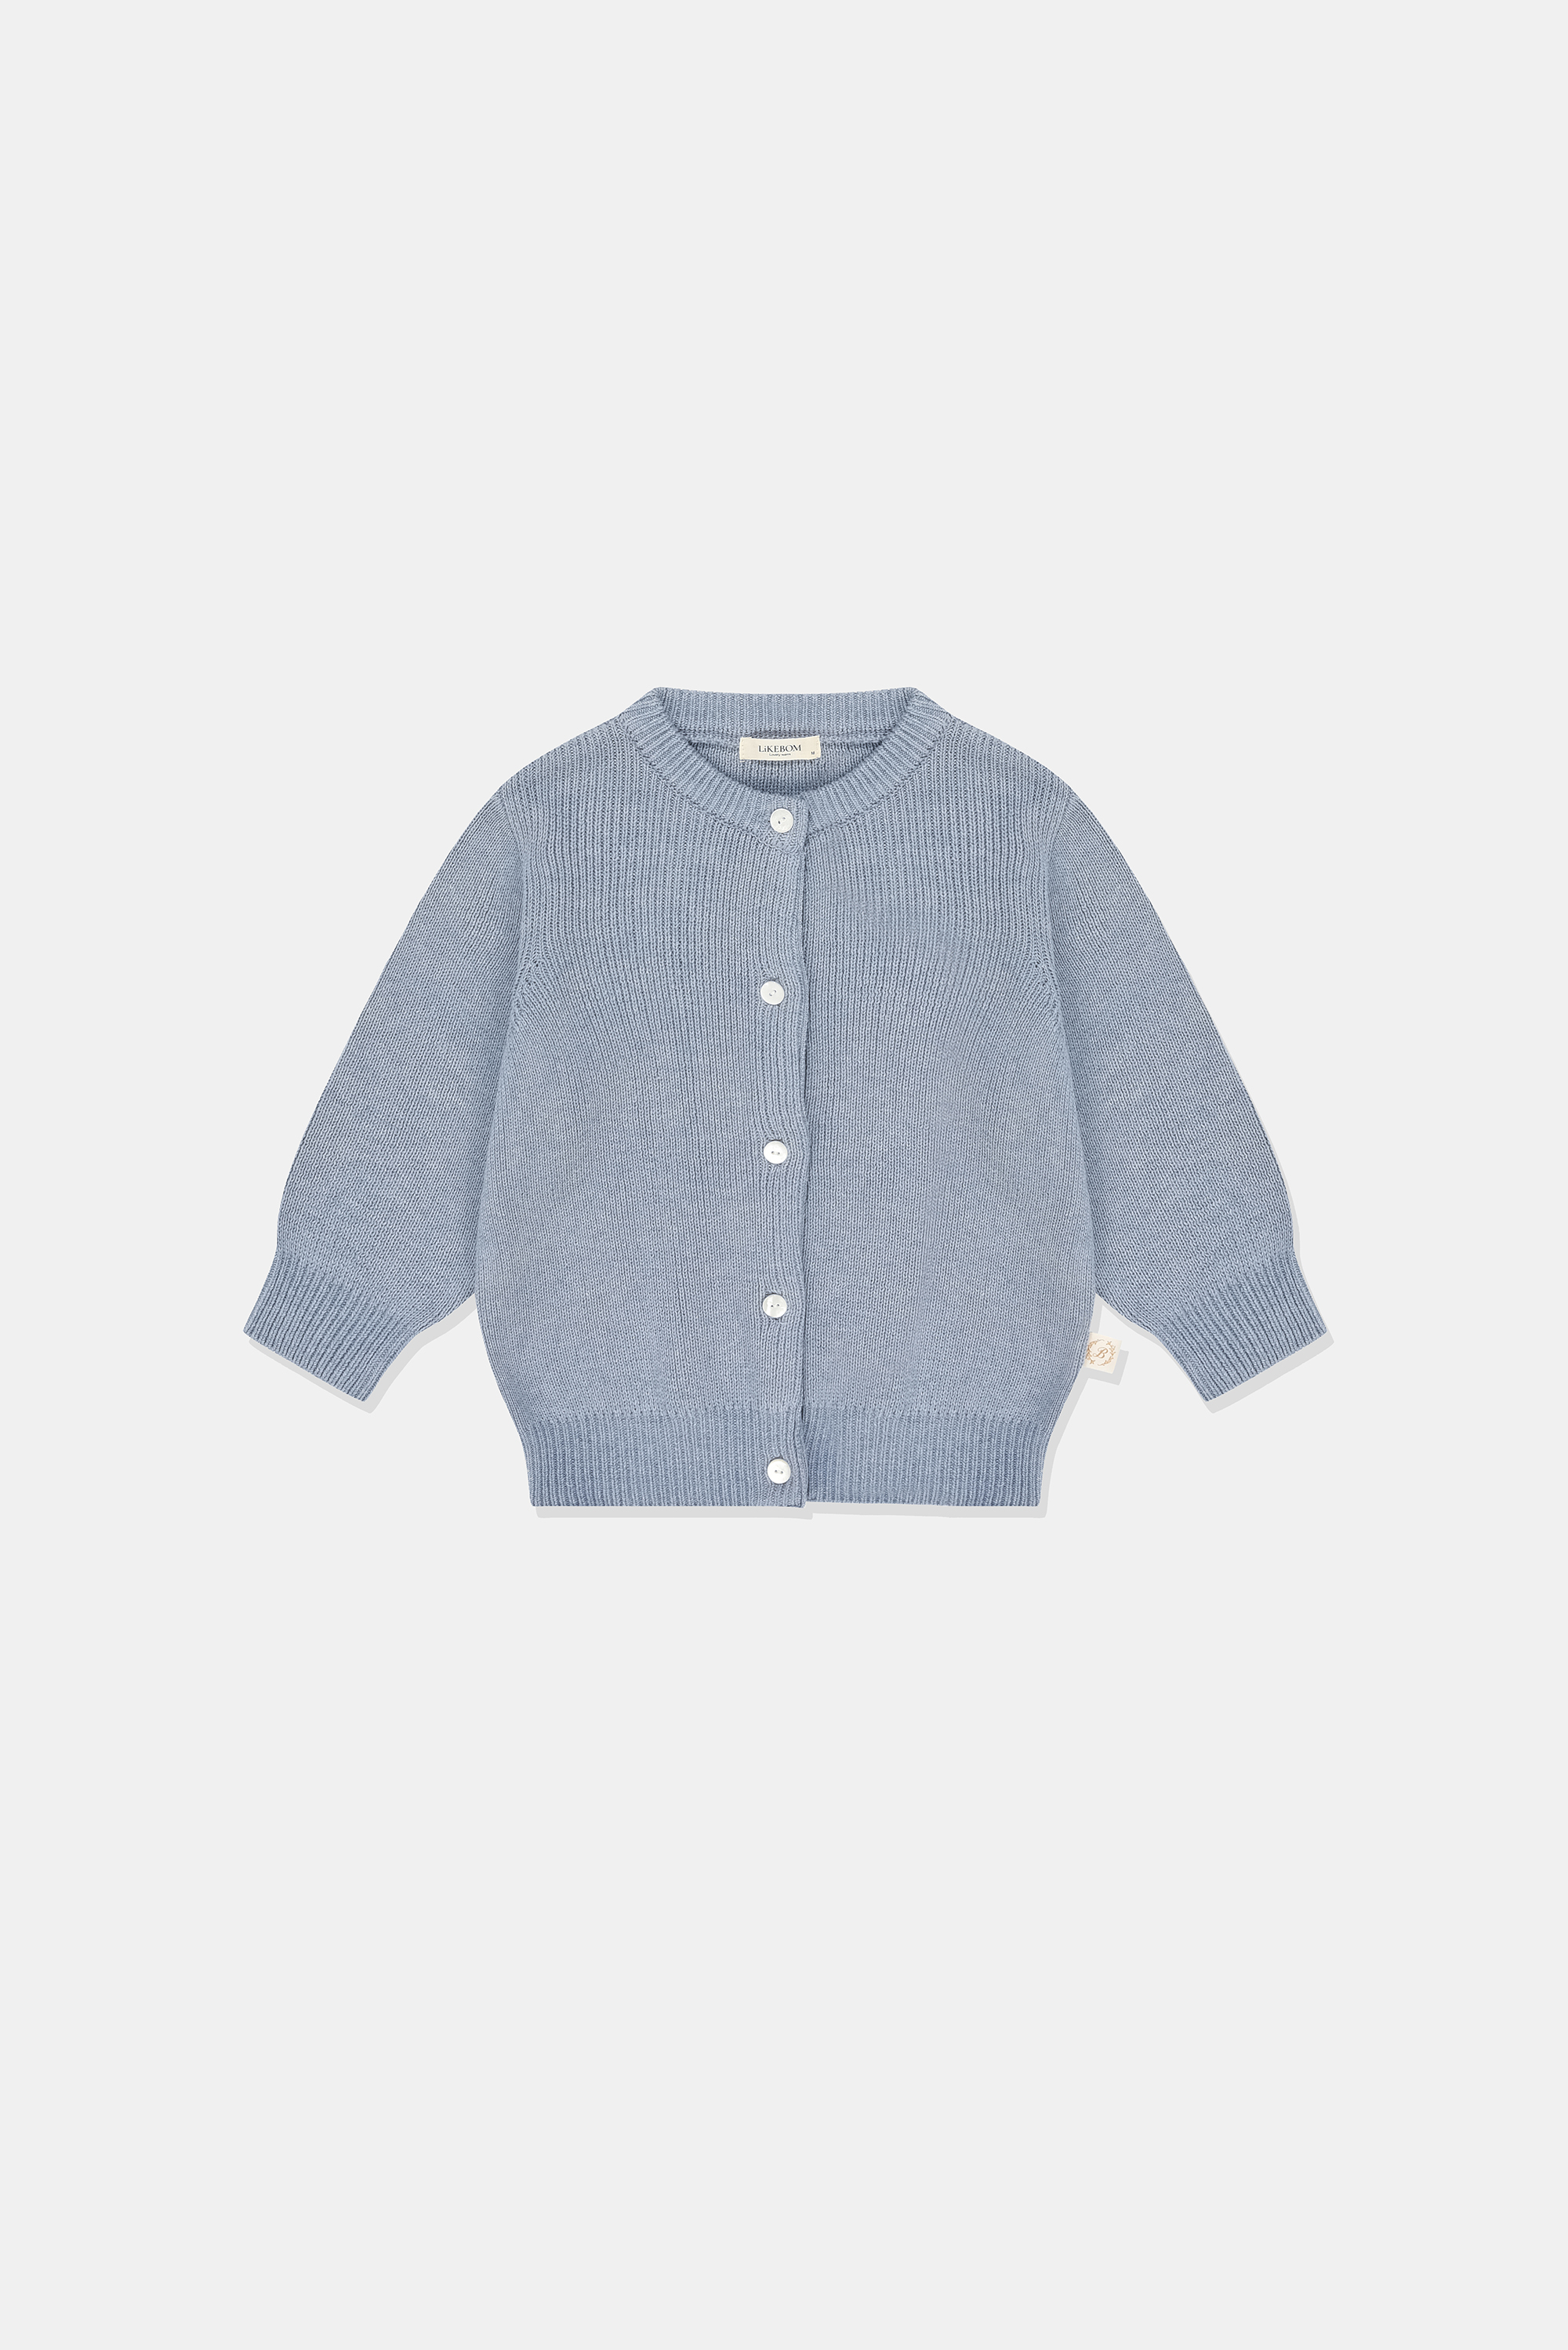 Toddler) Cotton Knit Cardigan, Melange Blue